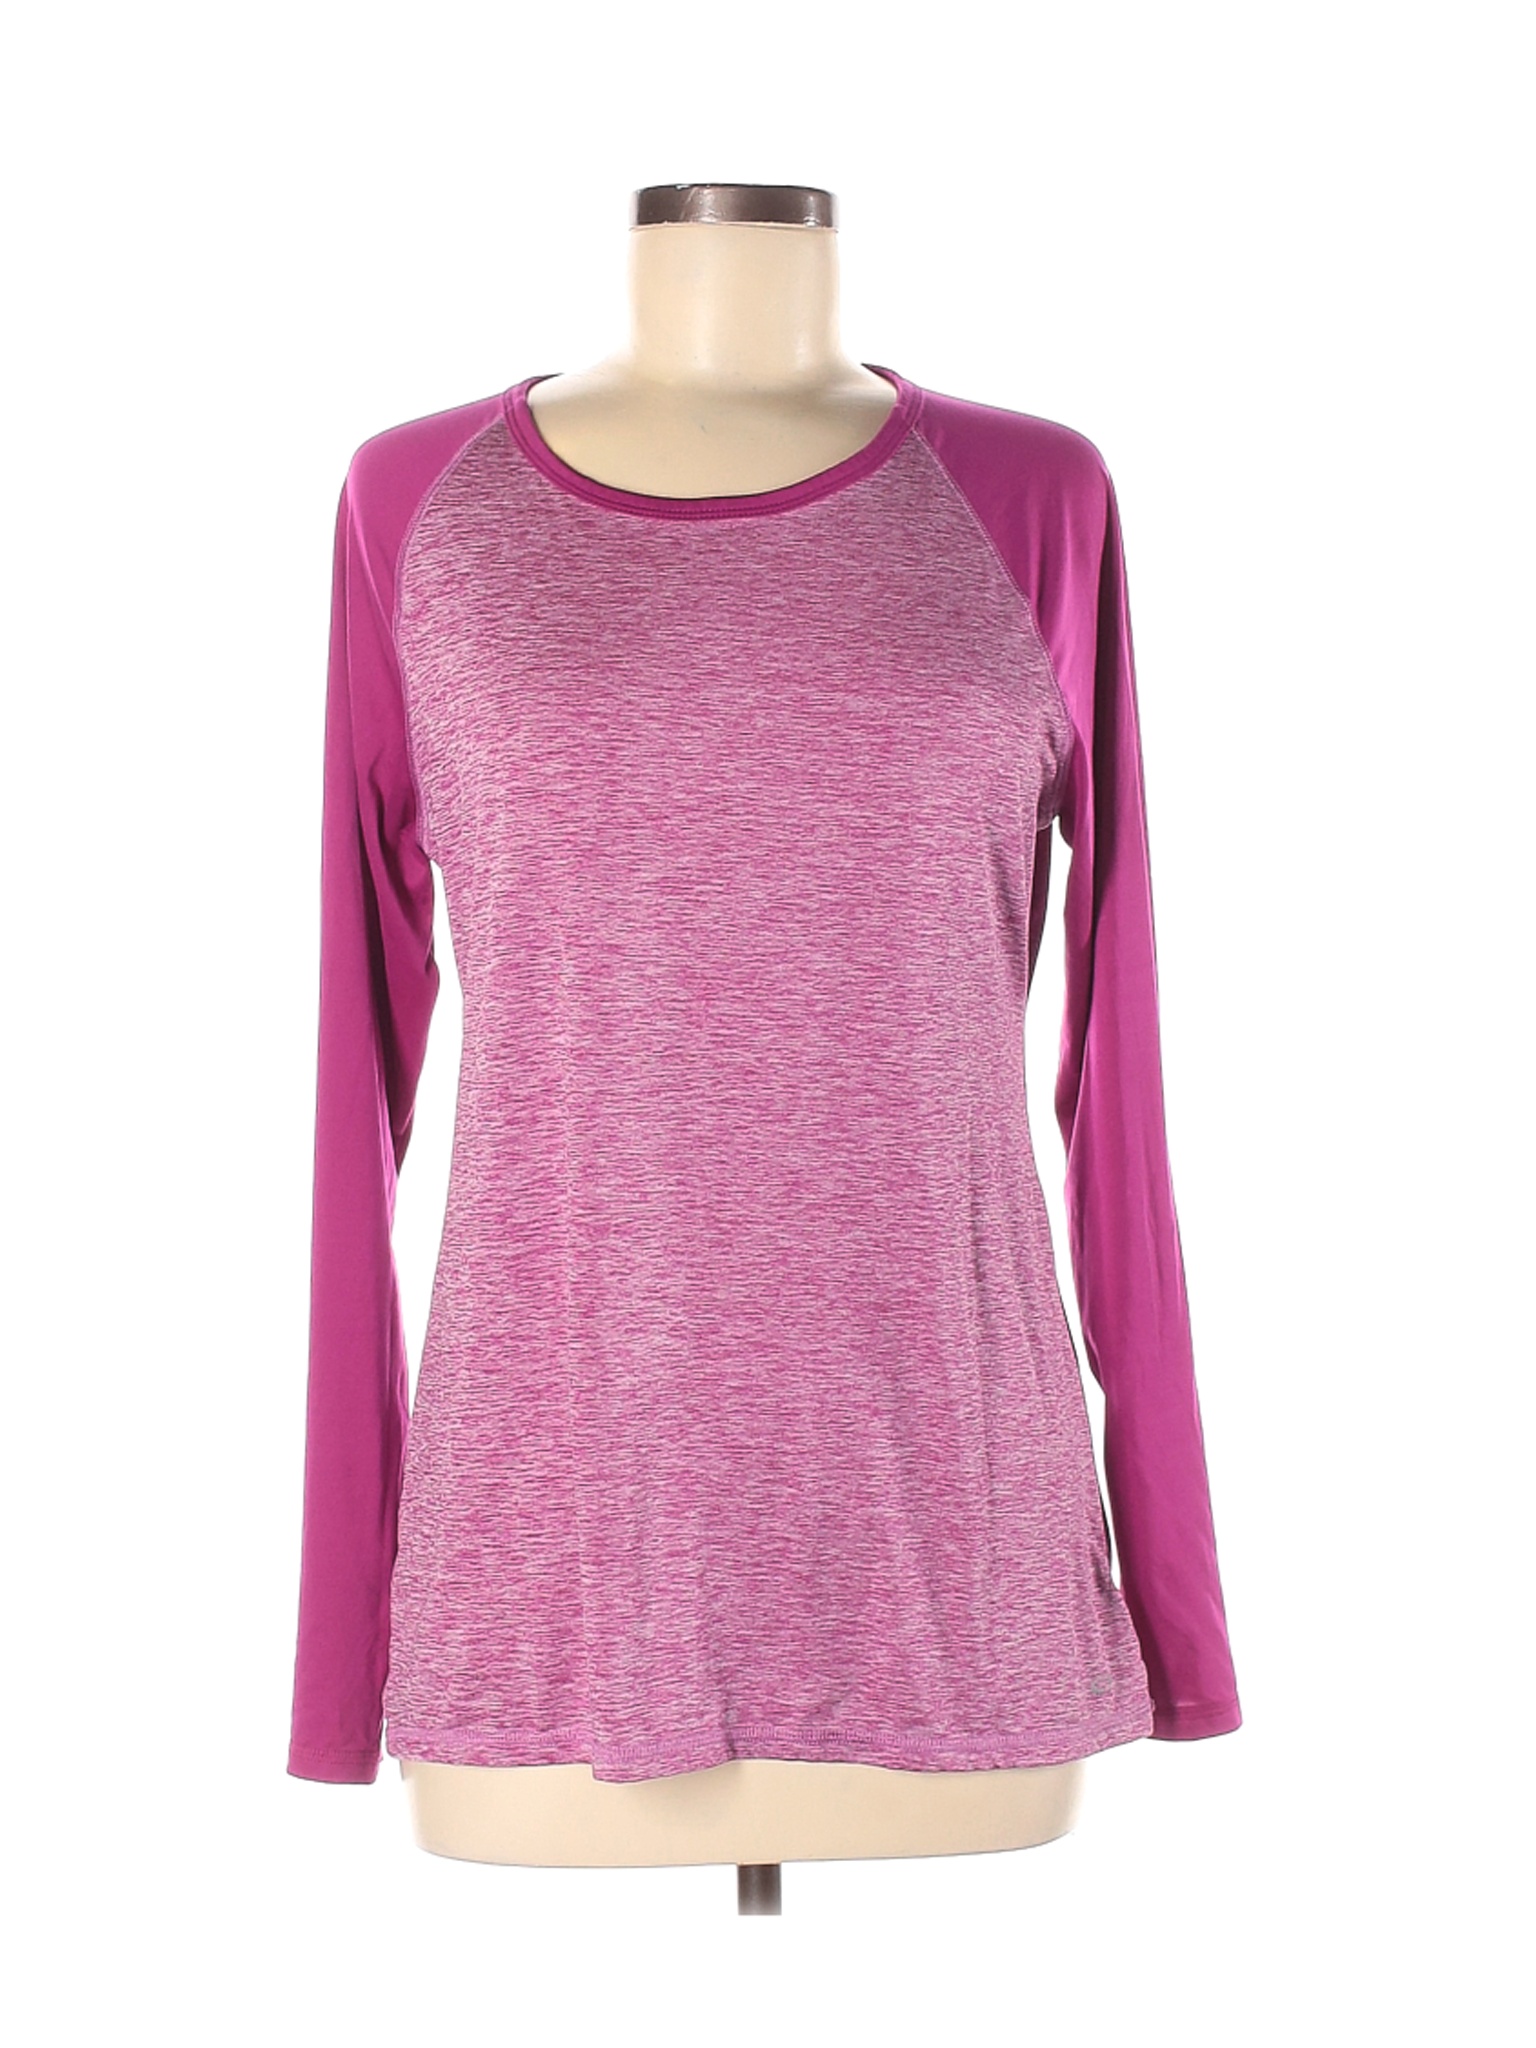 Champion Women Purple Active T-Shirt M | eBay